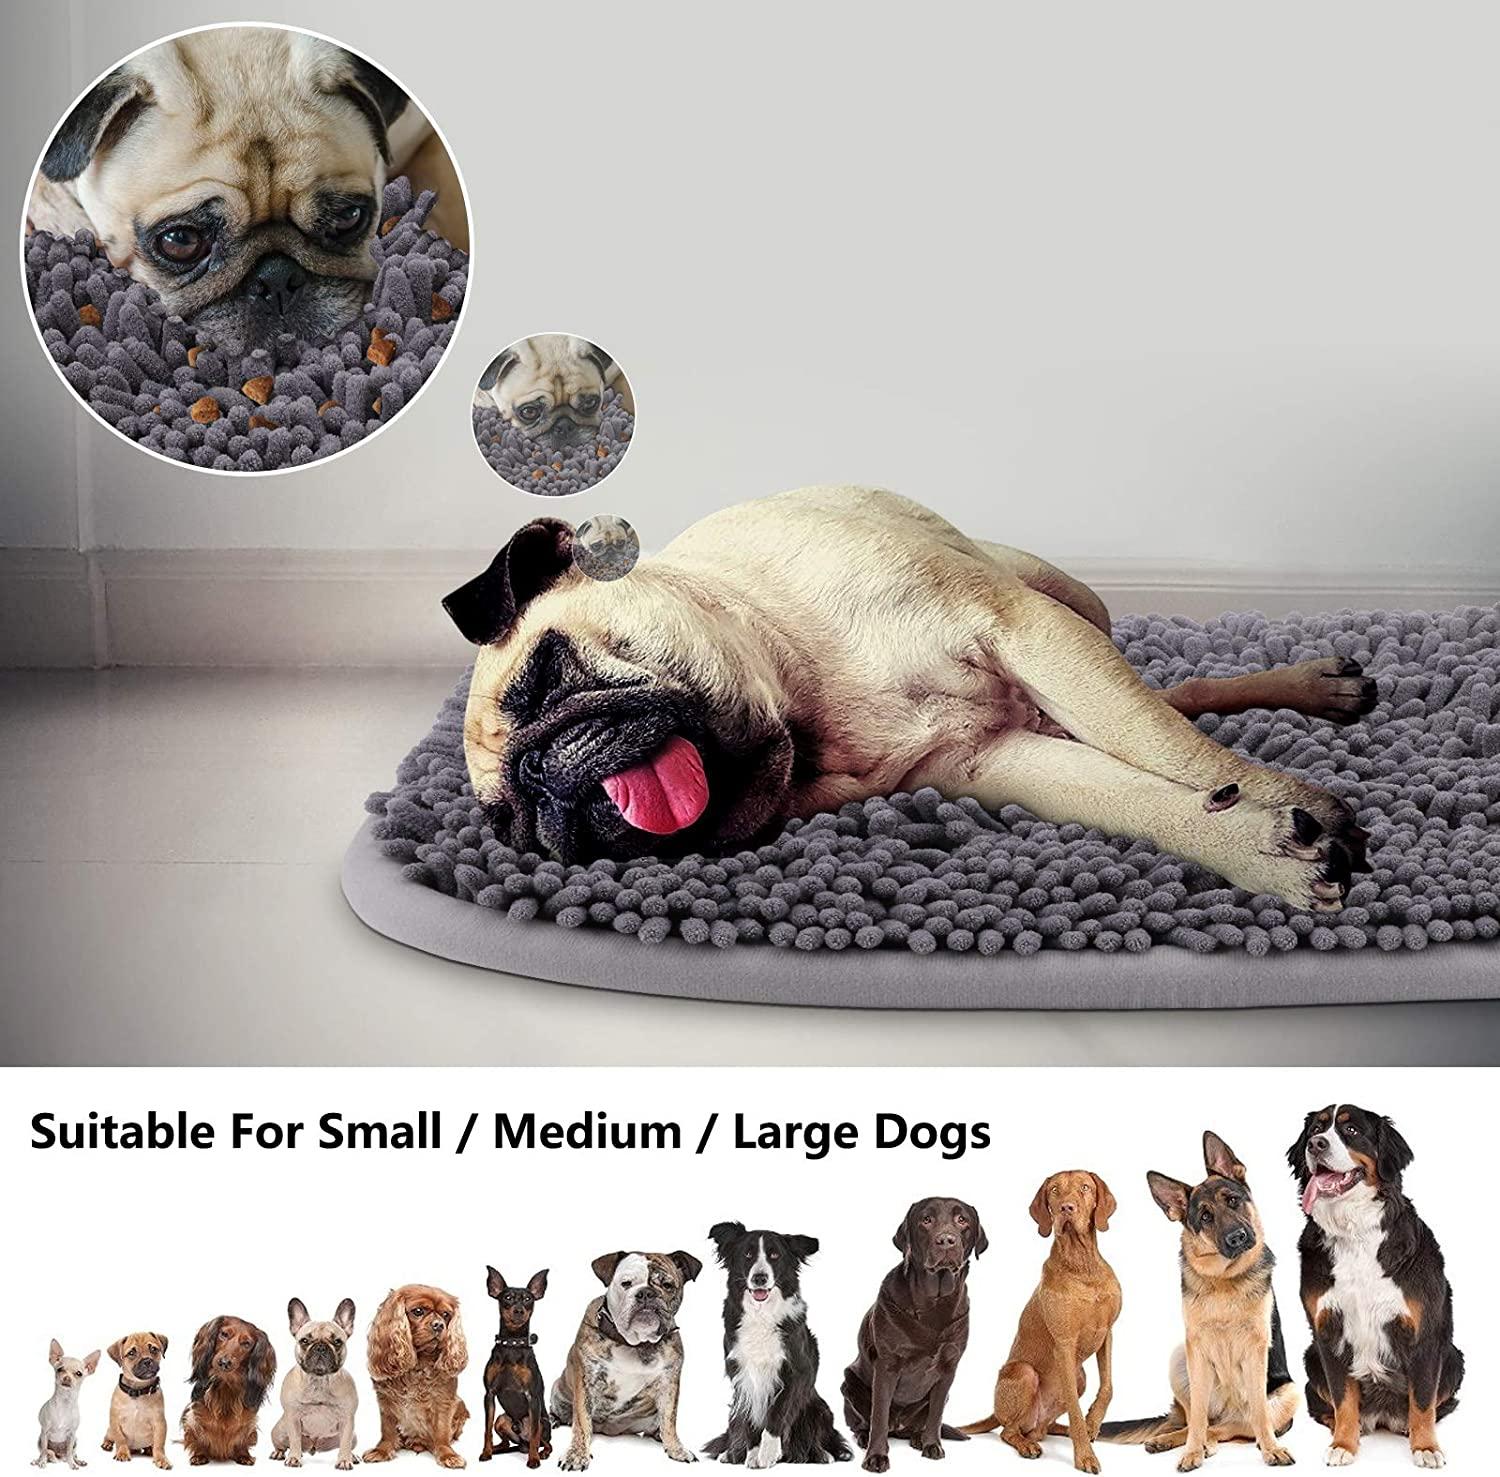 Pet Dog Sniffing Mat Dog Puzzle Toy Pet Snack Feeding Mat Boring  Interactive Gam